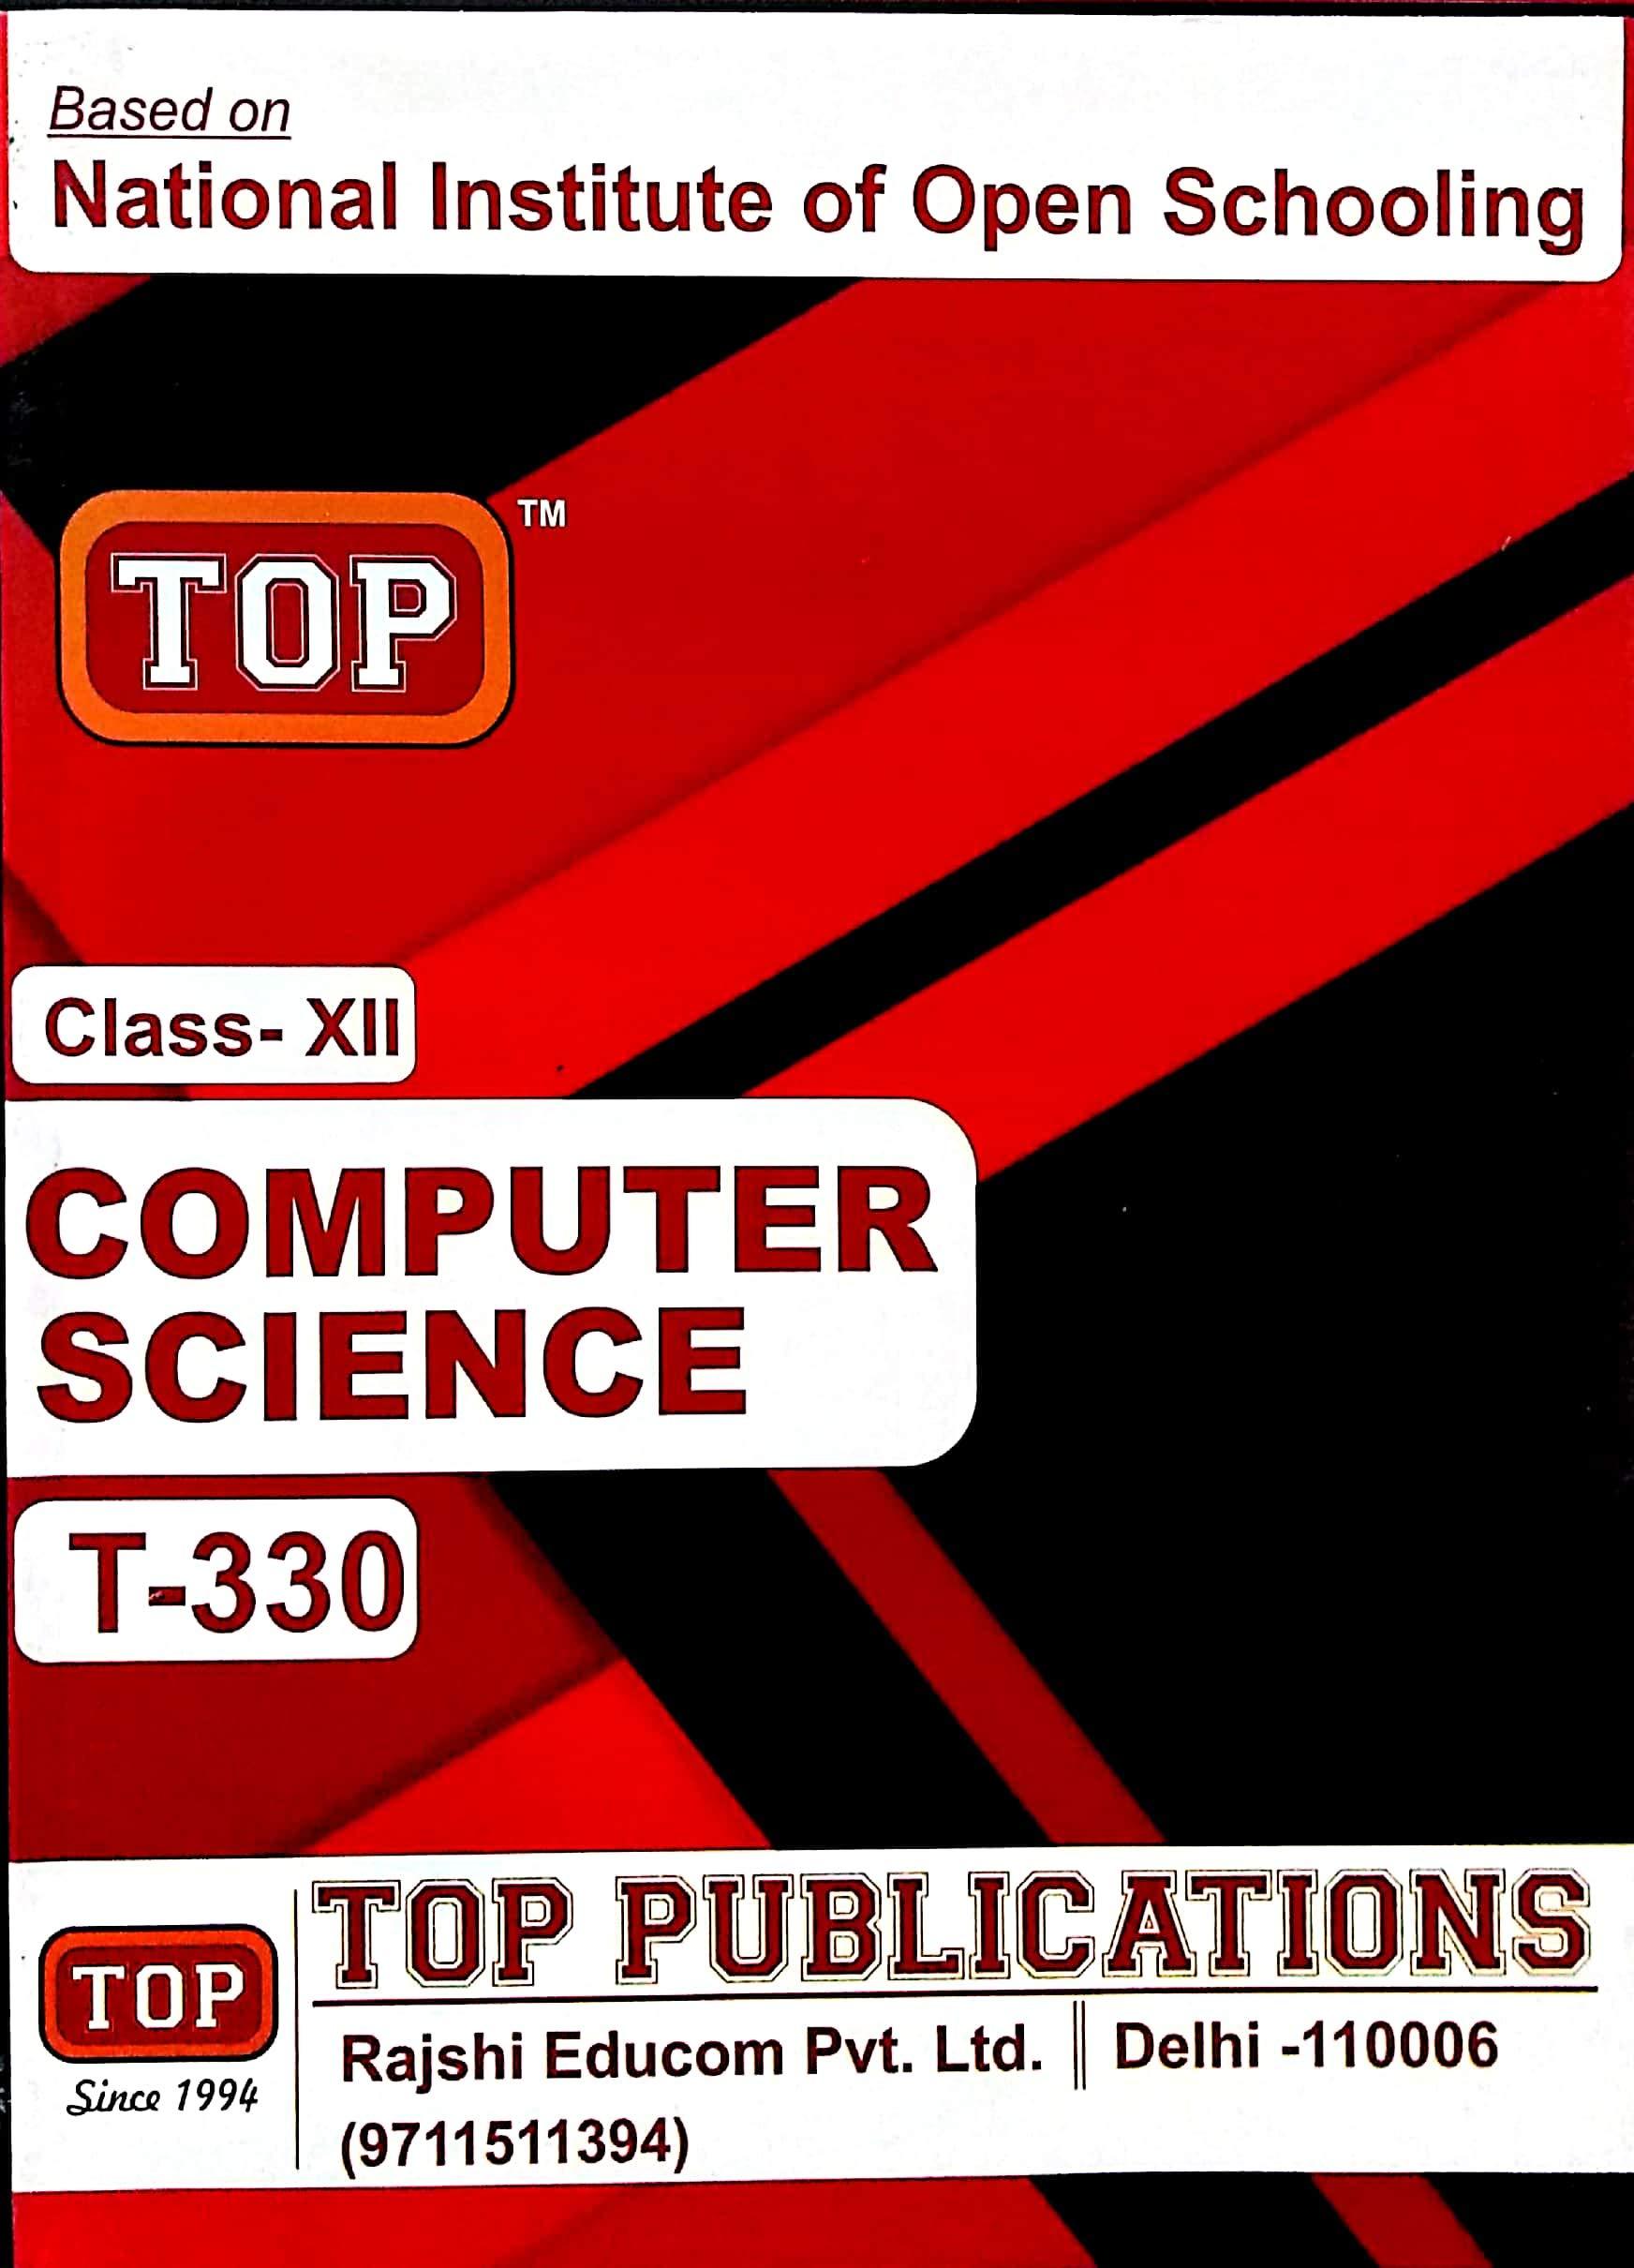  Computer Science (330)